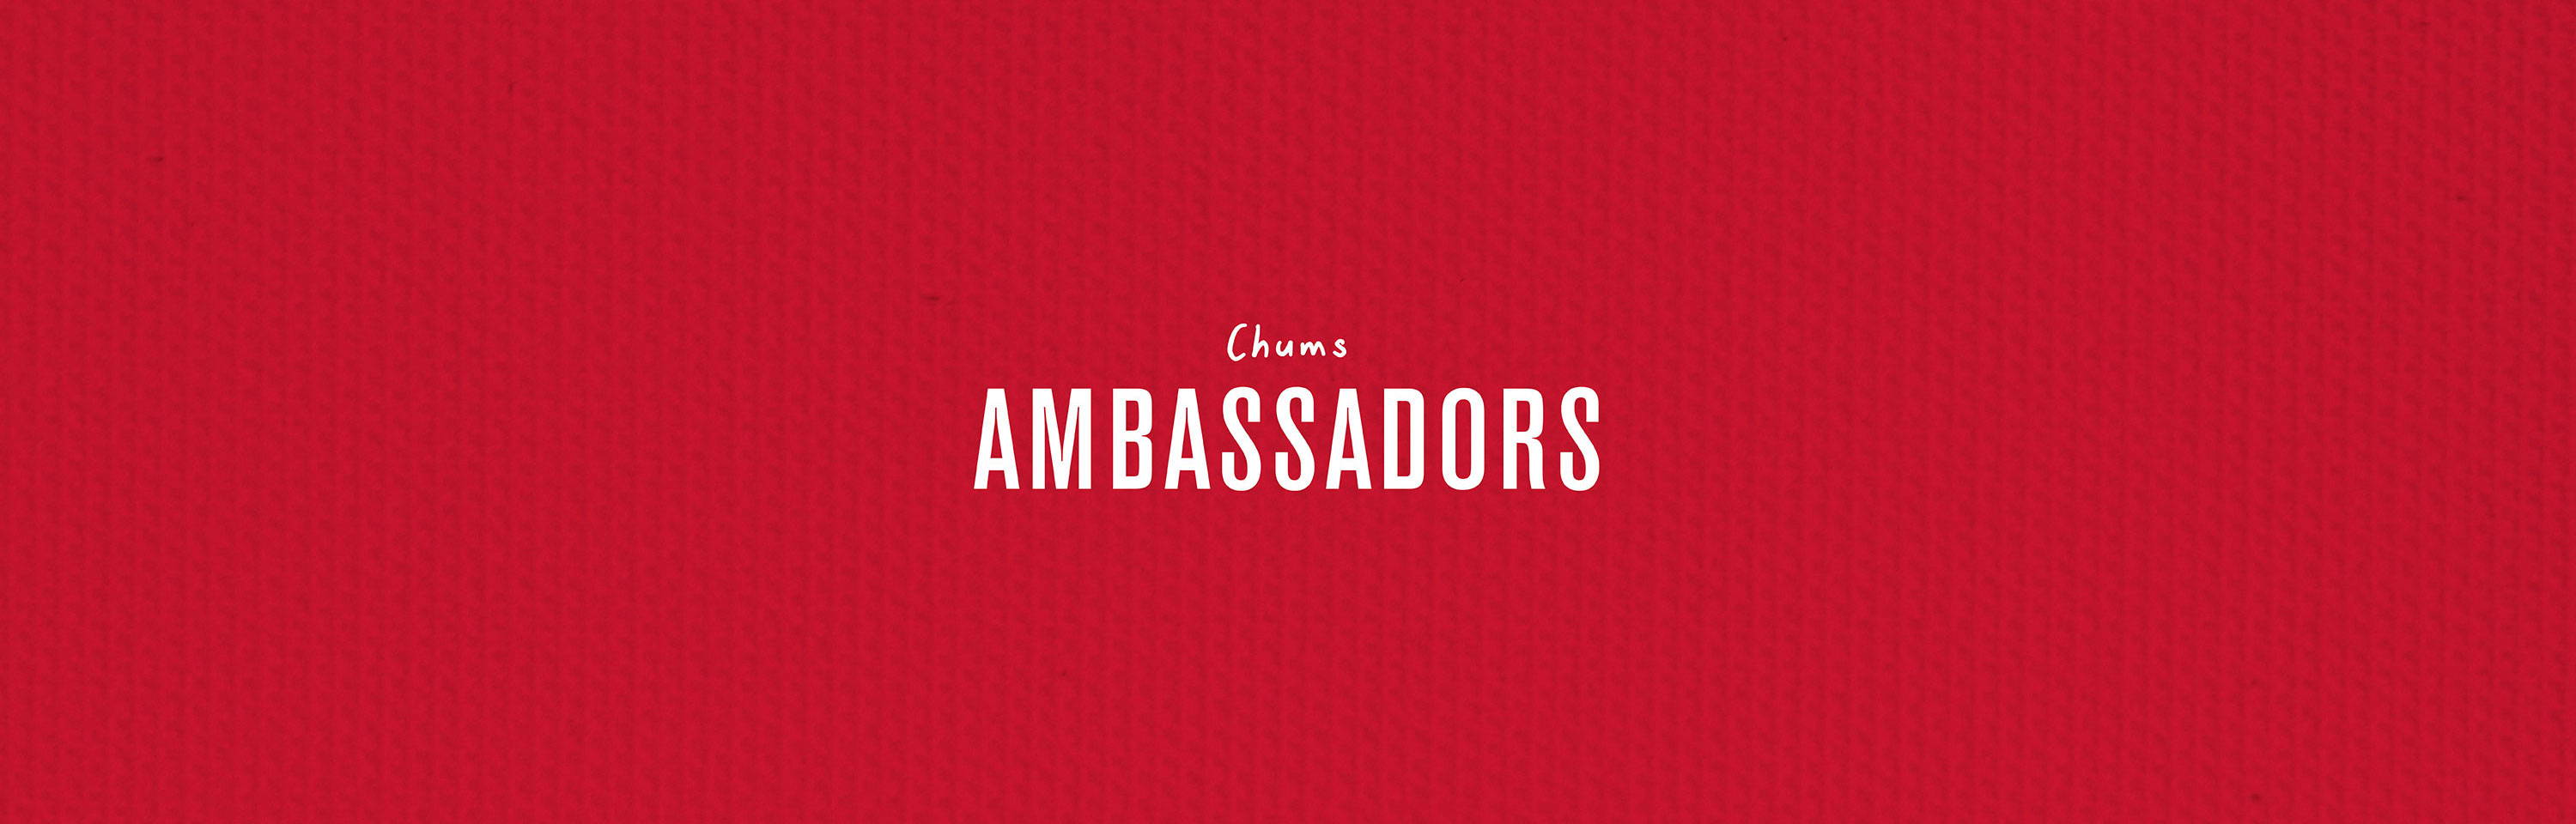 CHUMS Ambassadors